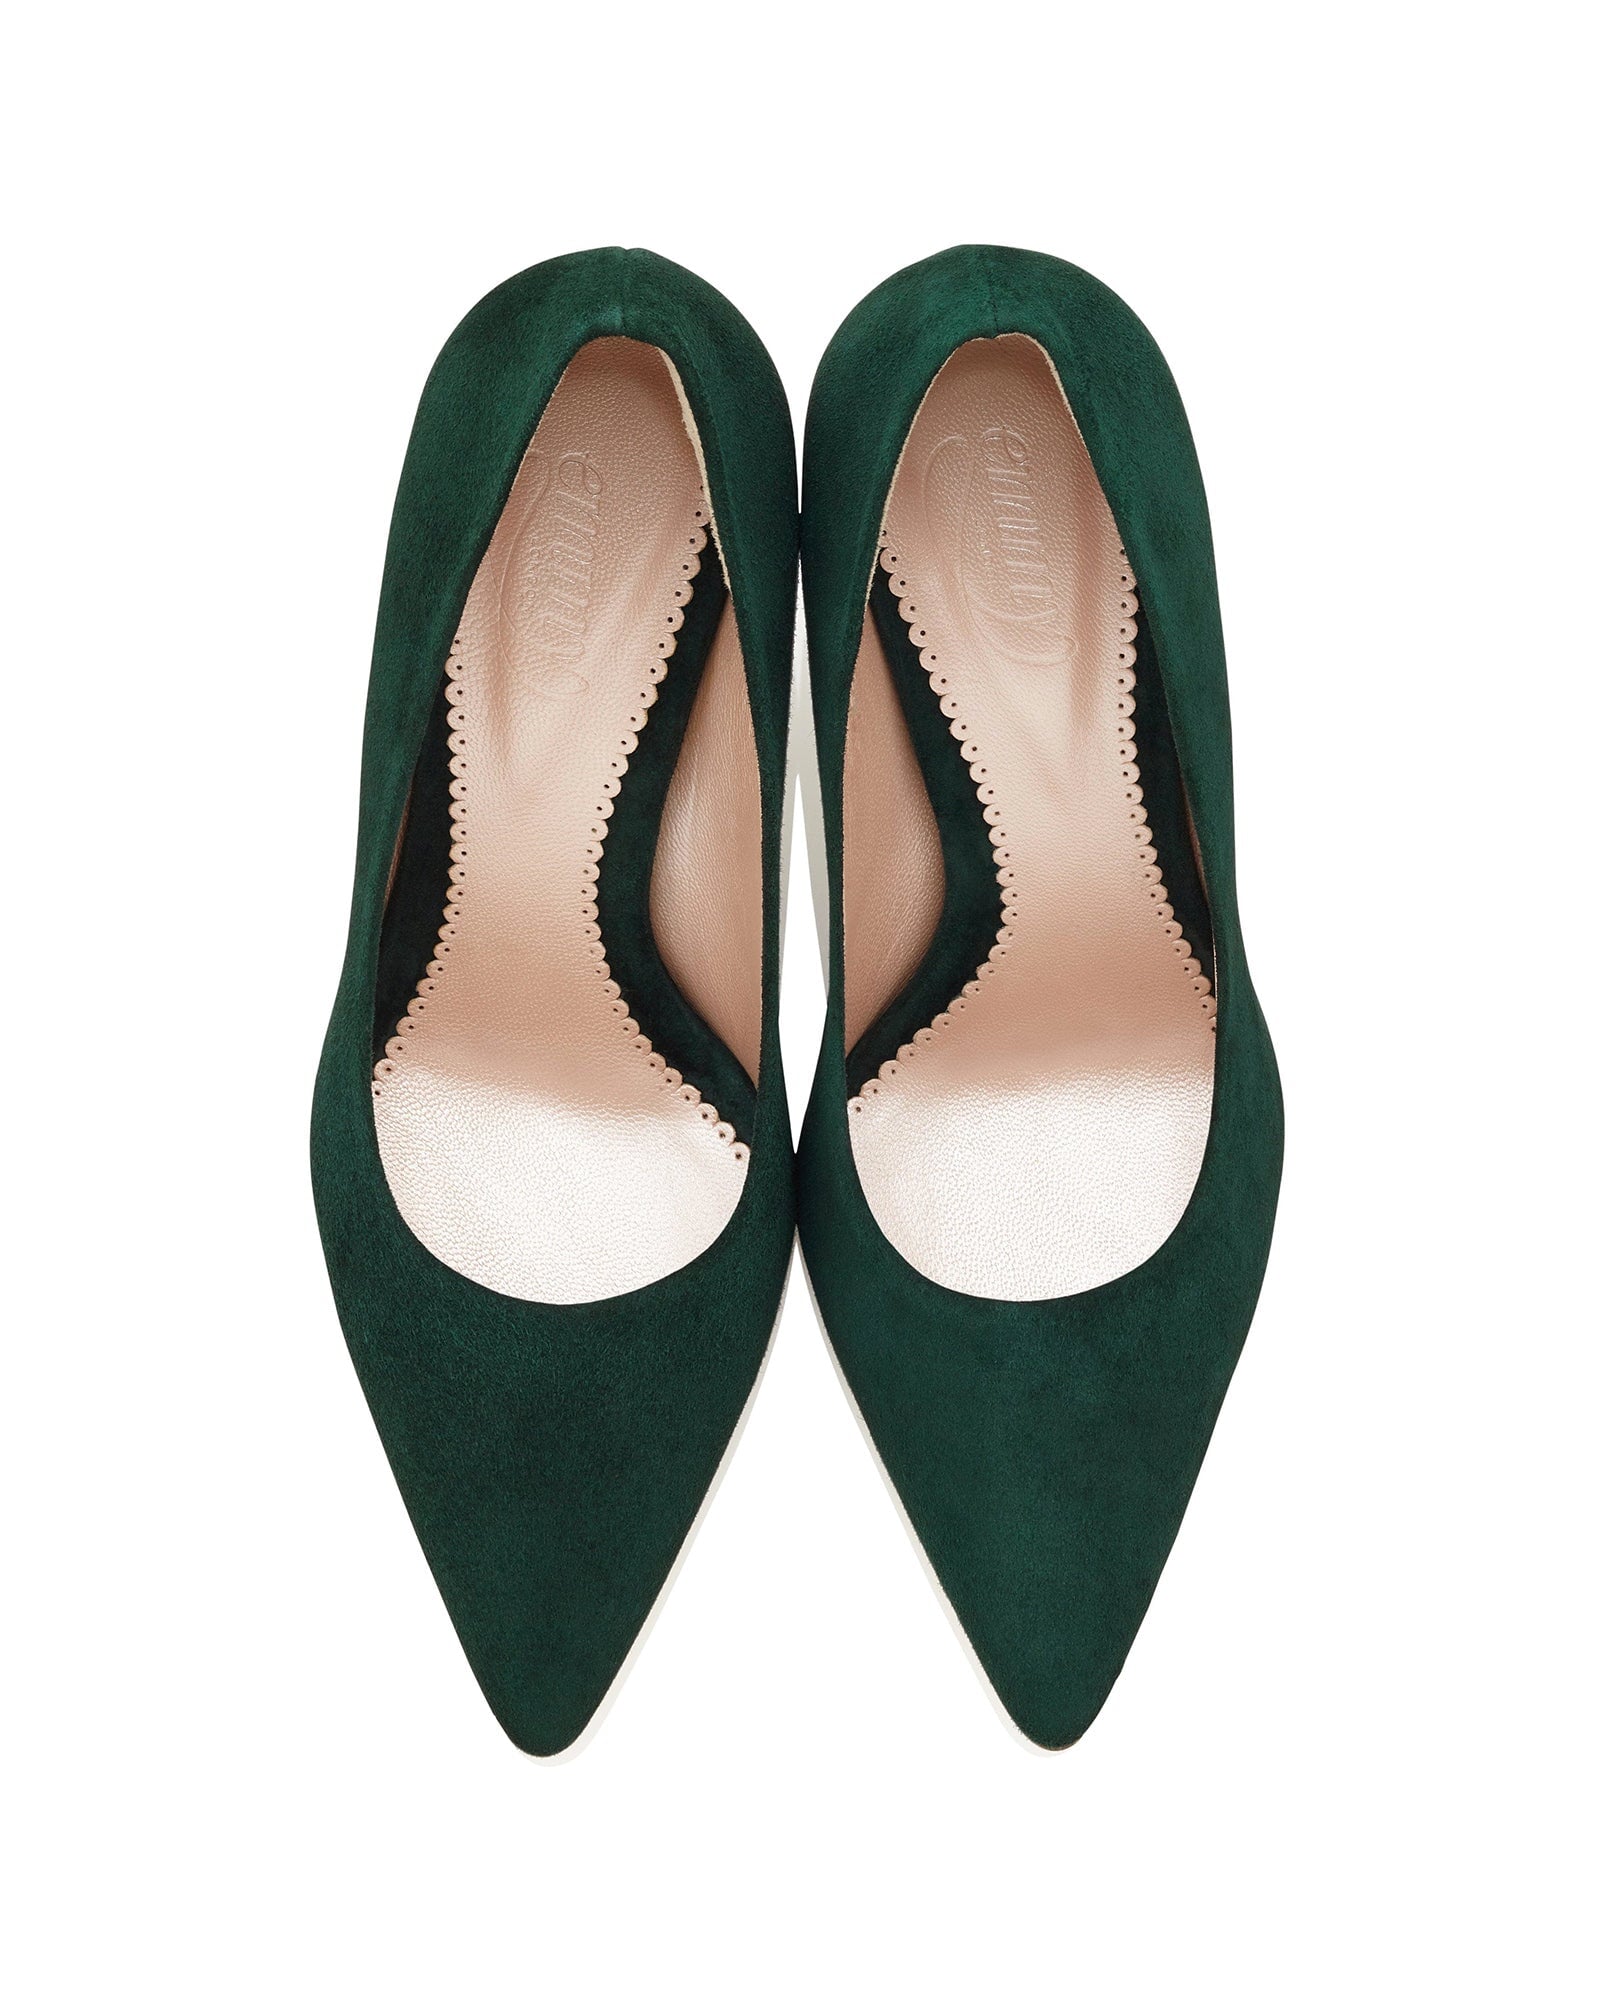 Olivia Greenery Fashion Shoe Rich Green Suede Court Shoe  image